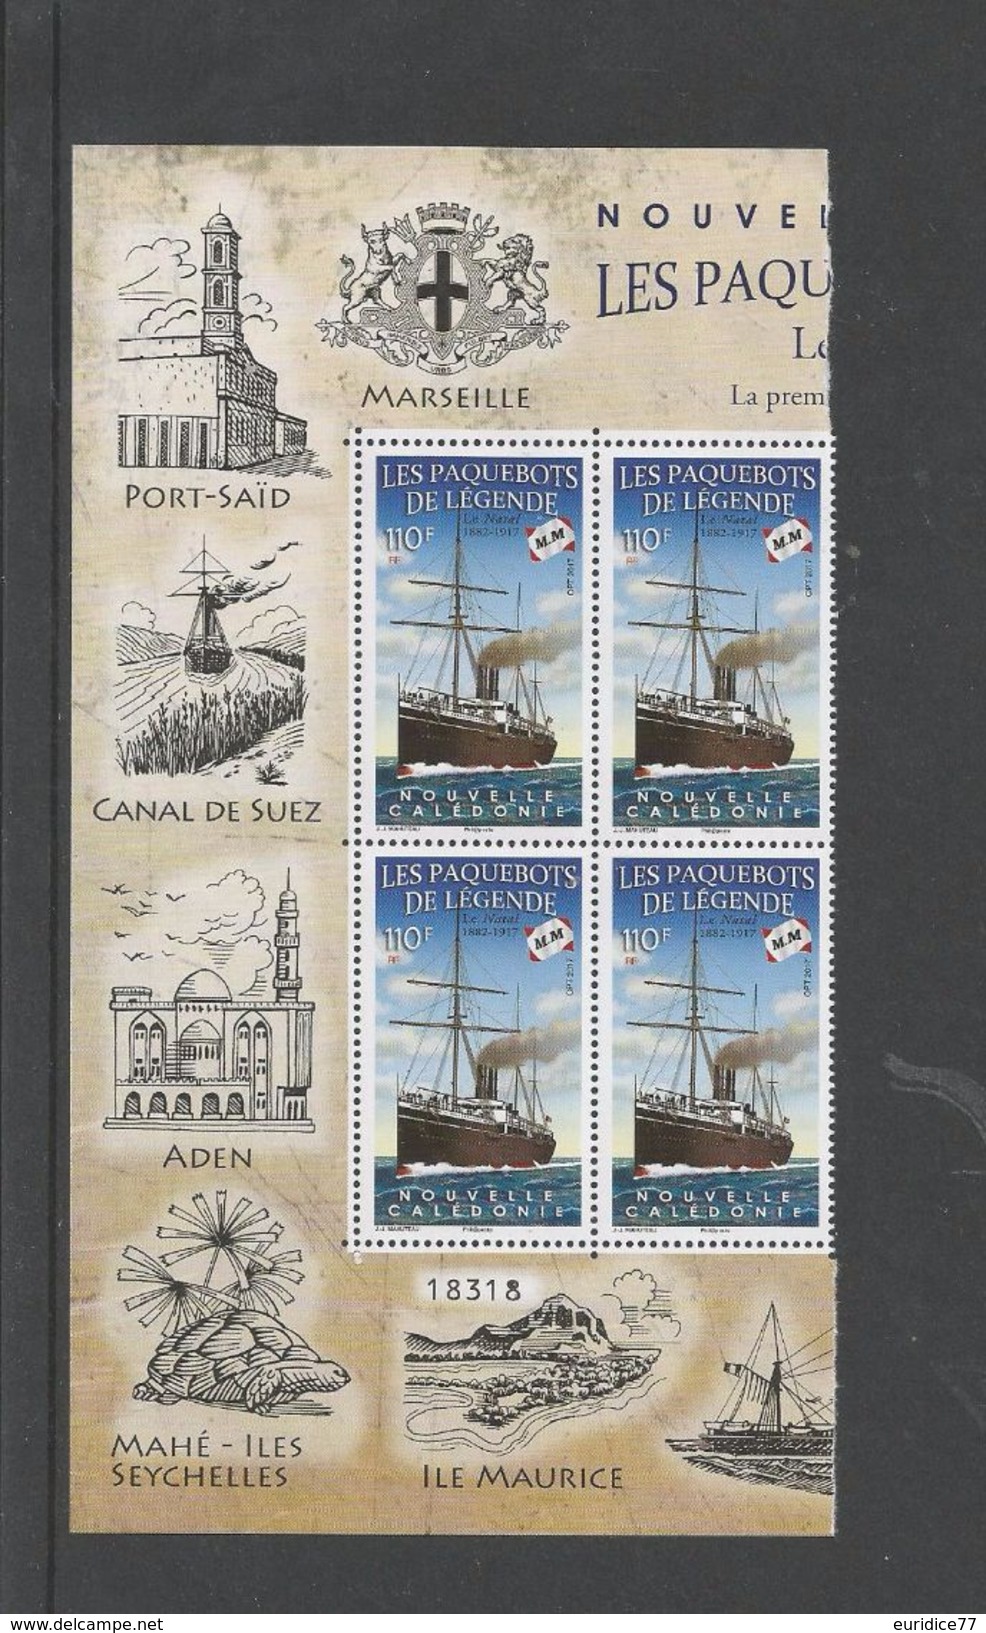 New Caledonia 2017 - Paquebots De Légende Block Of 4 Mnh - Unused Stamps